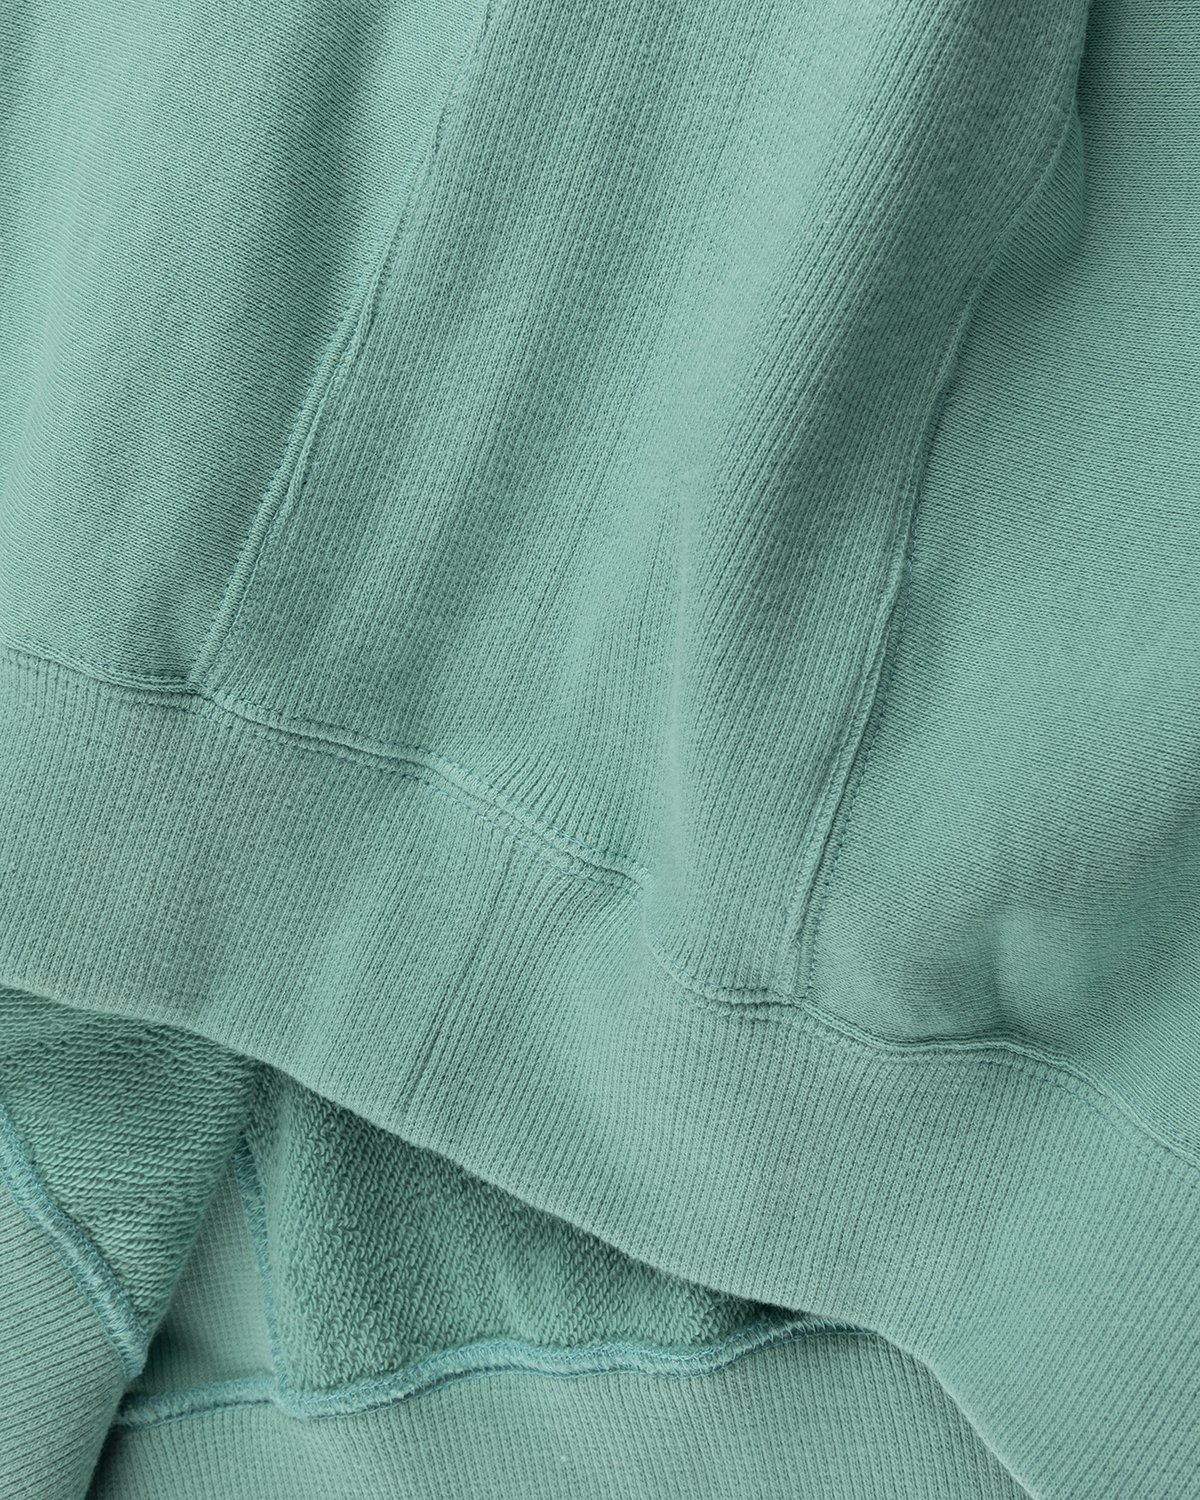 Nanzuka x Roby x Highsnobiety - Crewneck Turquoise - Clothing - Green - Image 6